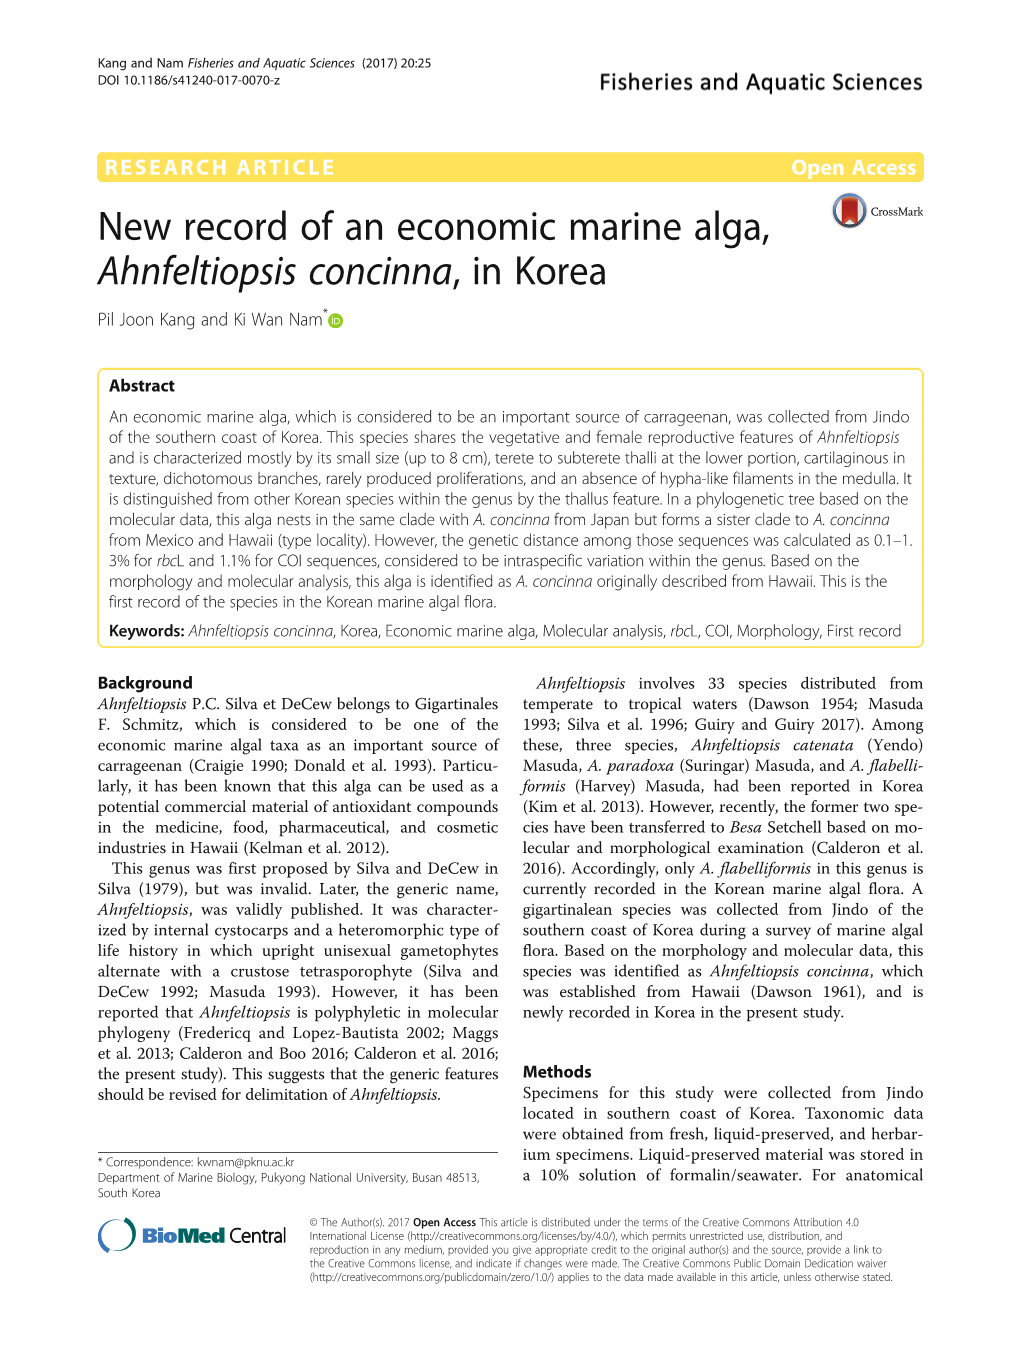 New Record of an Economic Marine Alga, Ahnfeltiopsis Concinna, in Korea Pil Joon Kang and Ki Wan Nam*